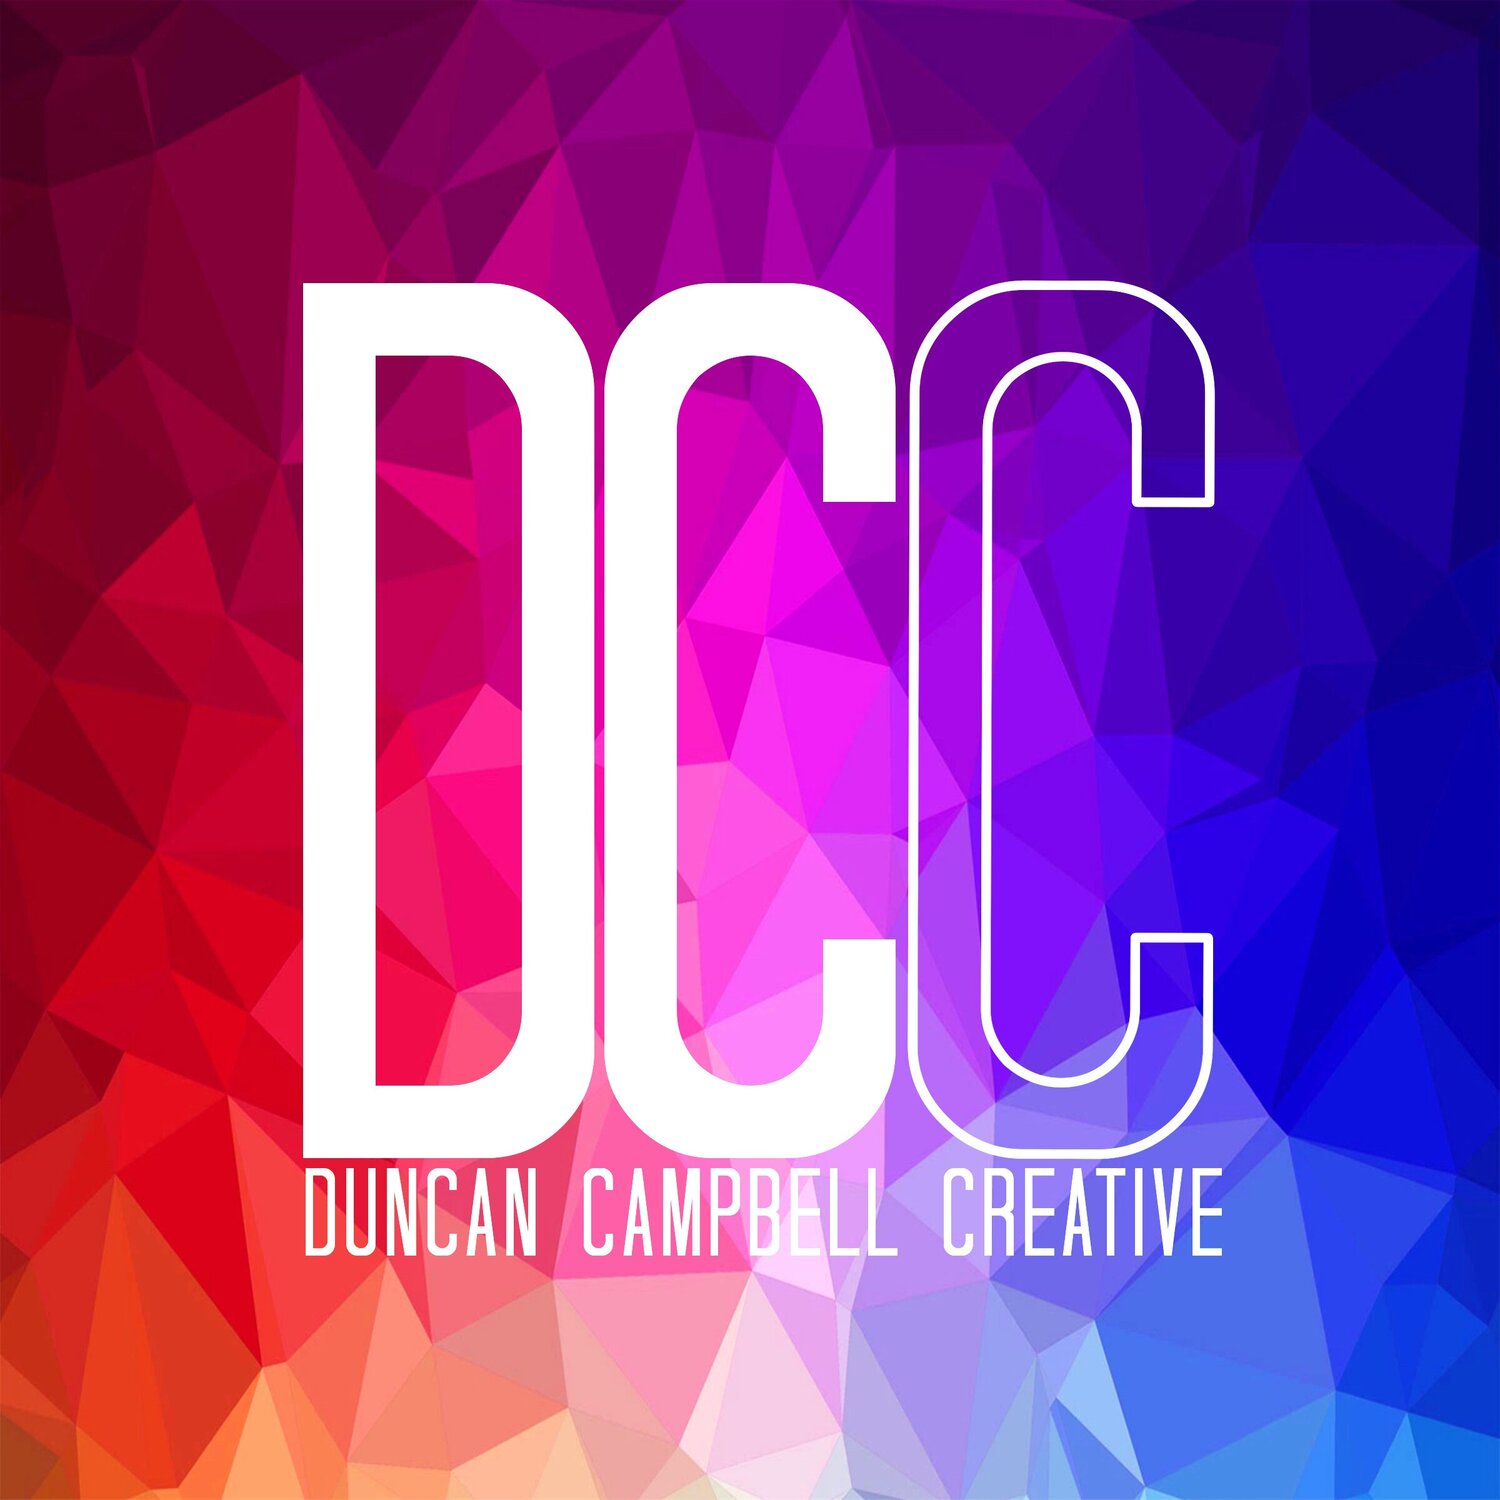 Duncan Campbell Creative